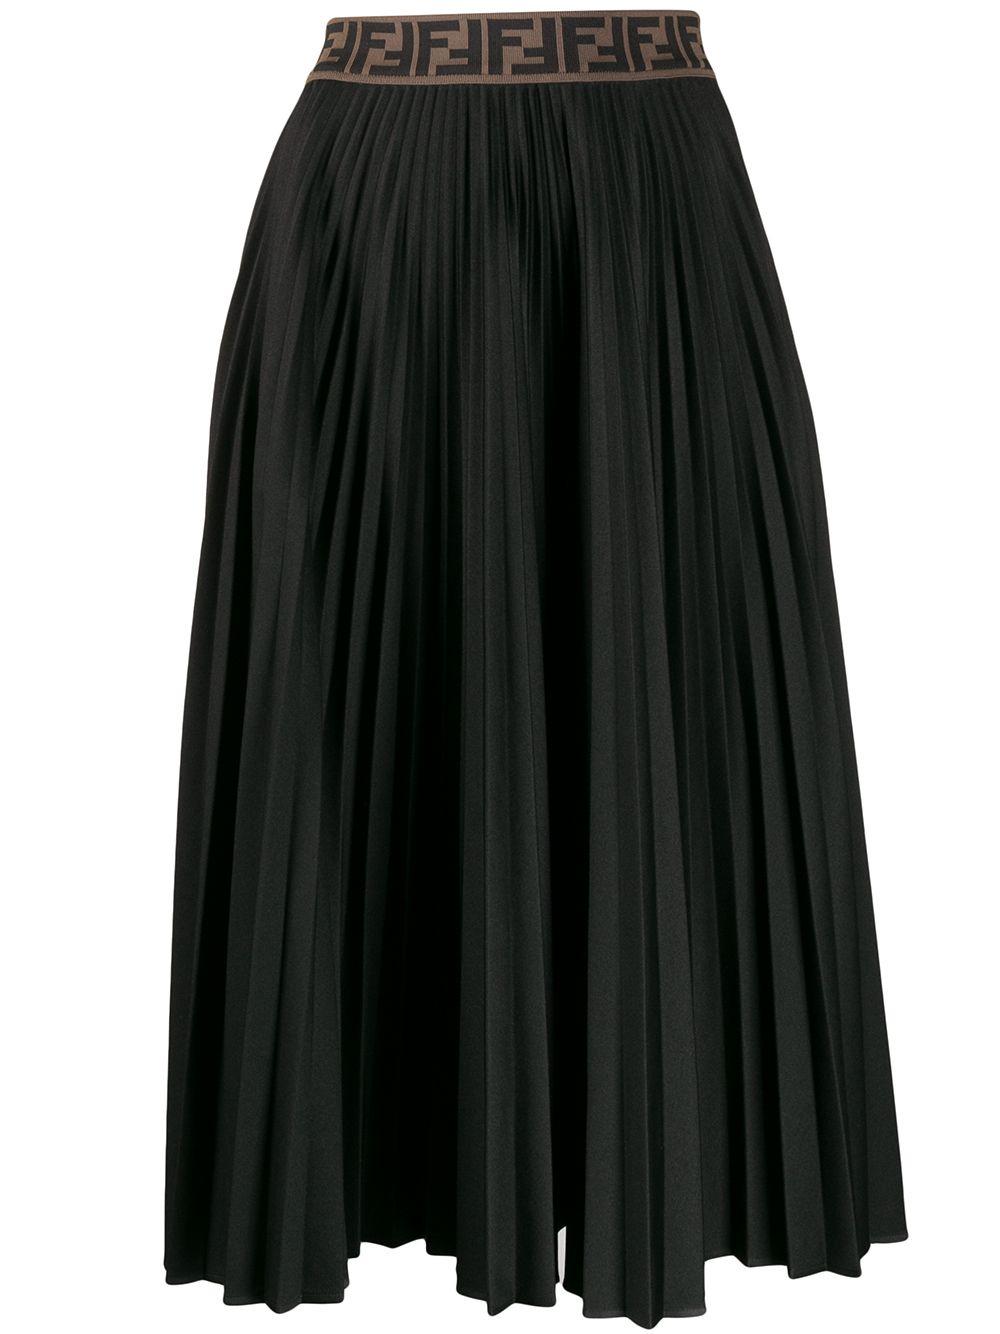 Fendi Ff Motif Pleated Skirt in Black | Lyst